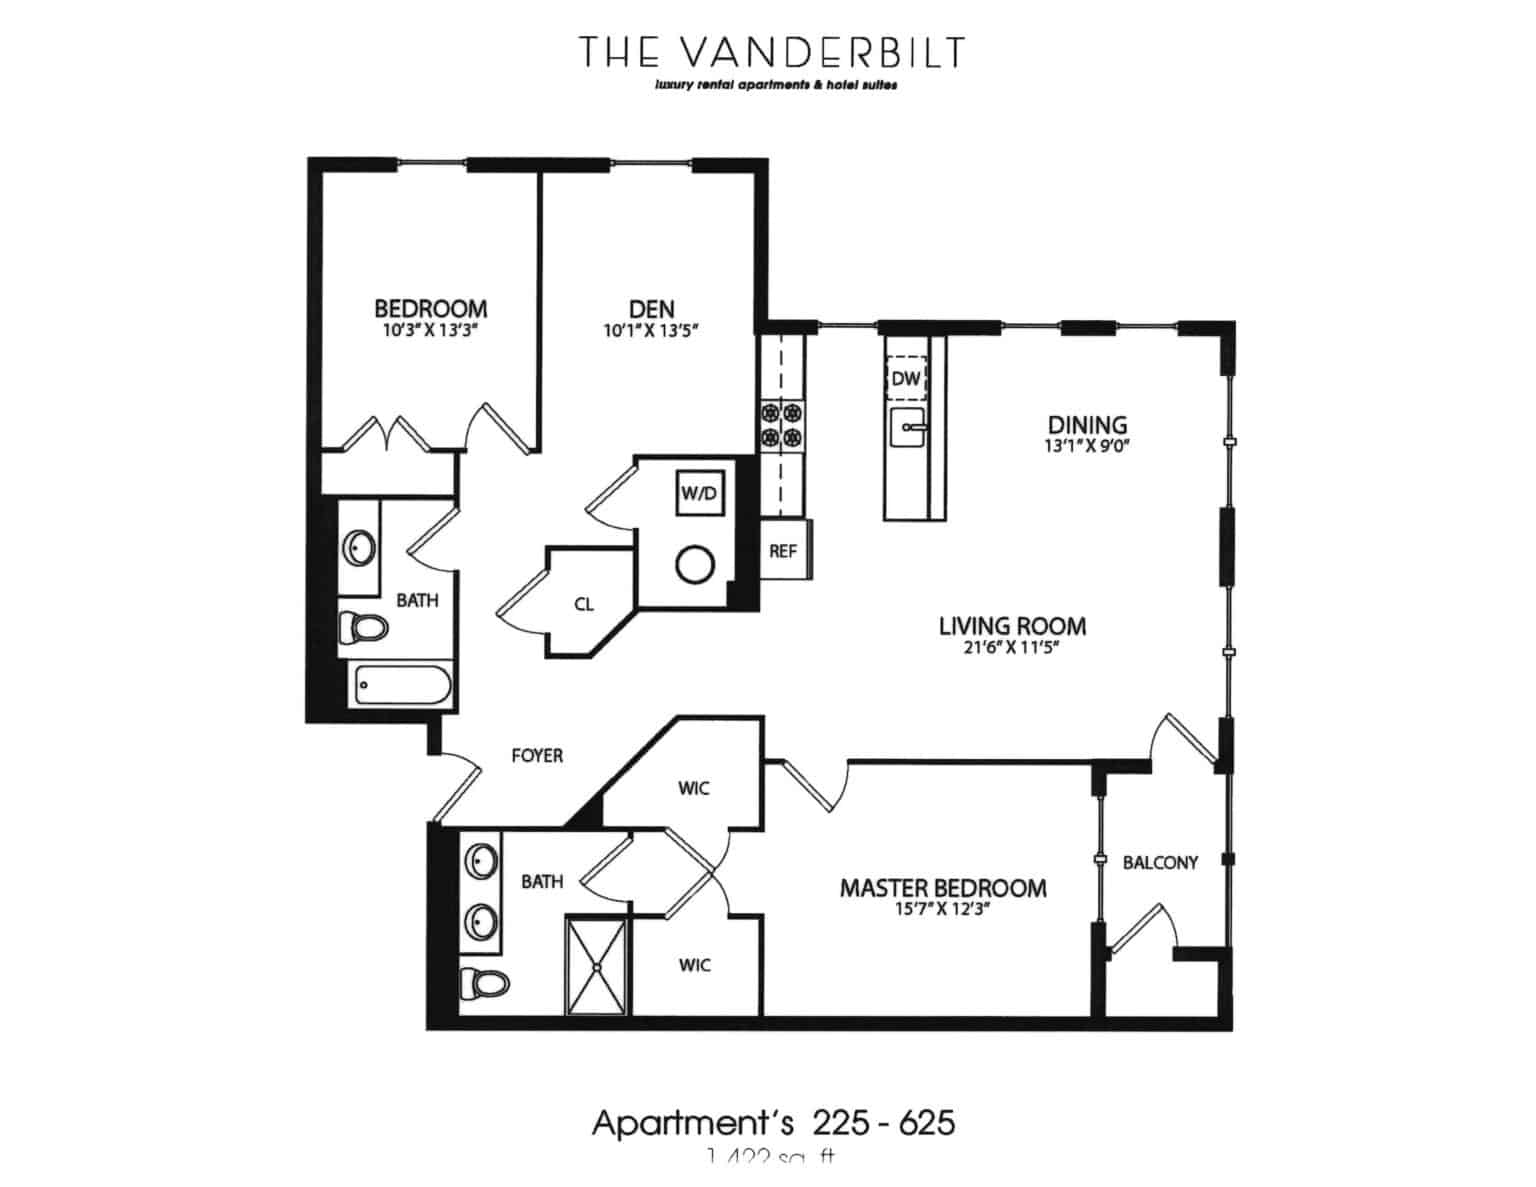 Vanderbilt 225 Floorplan